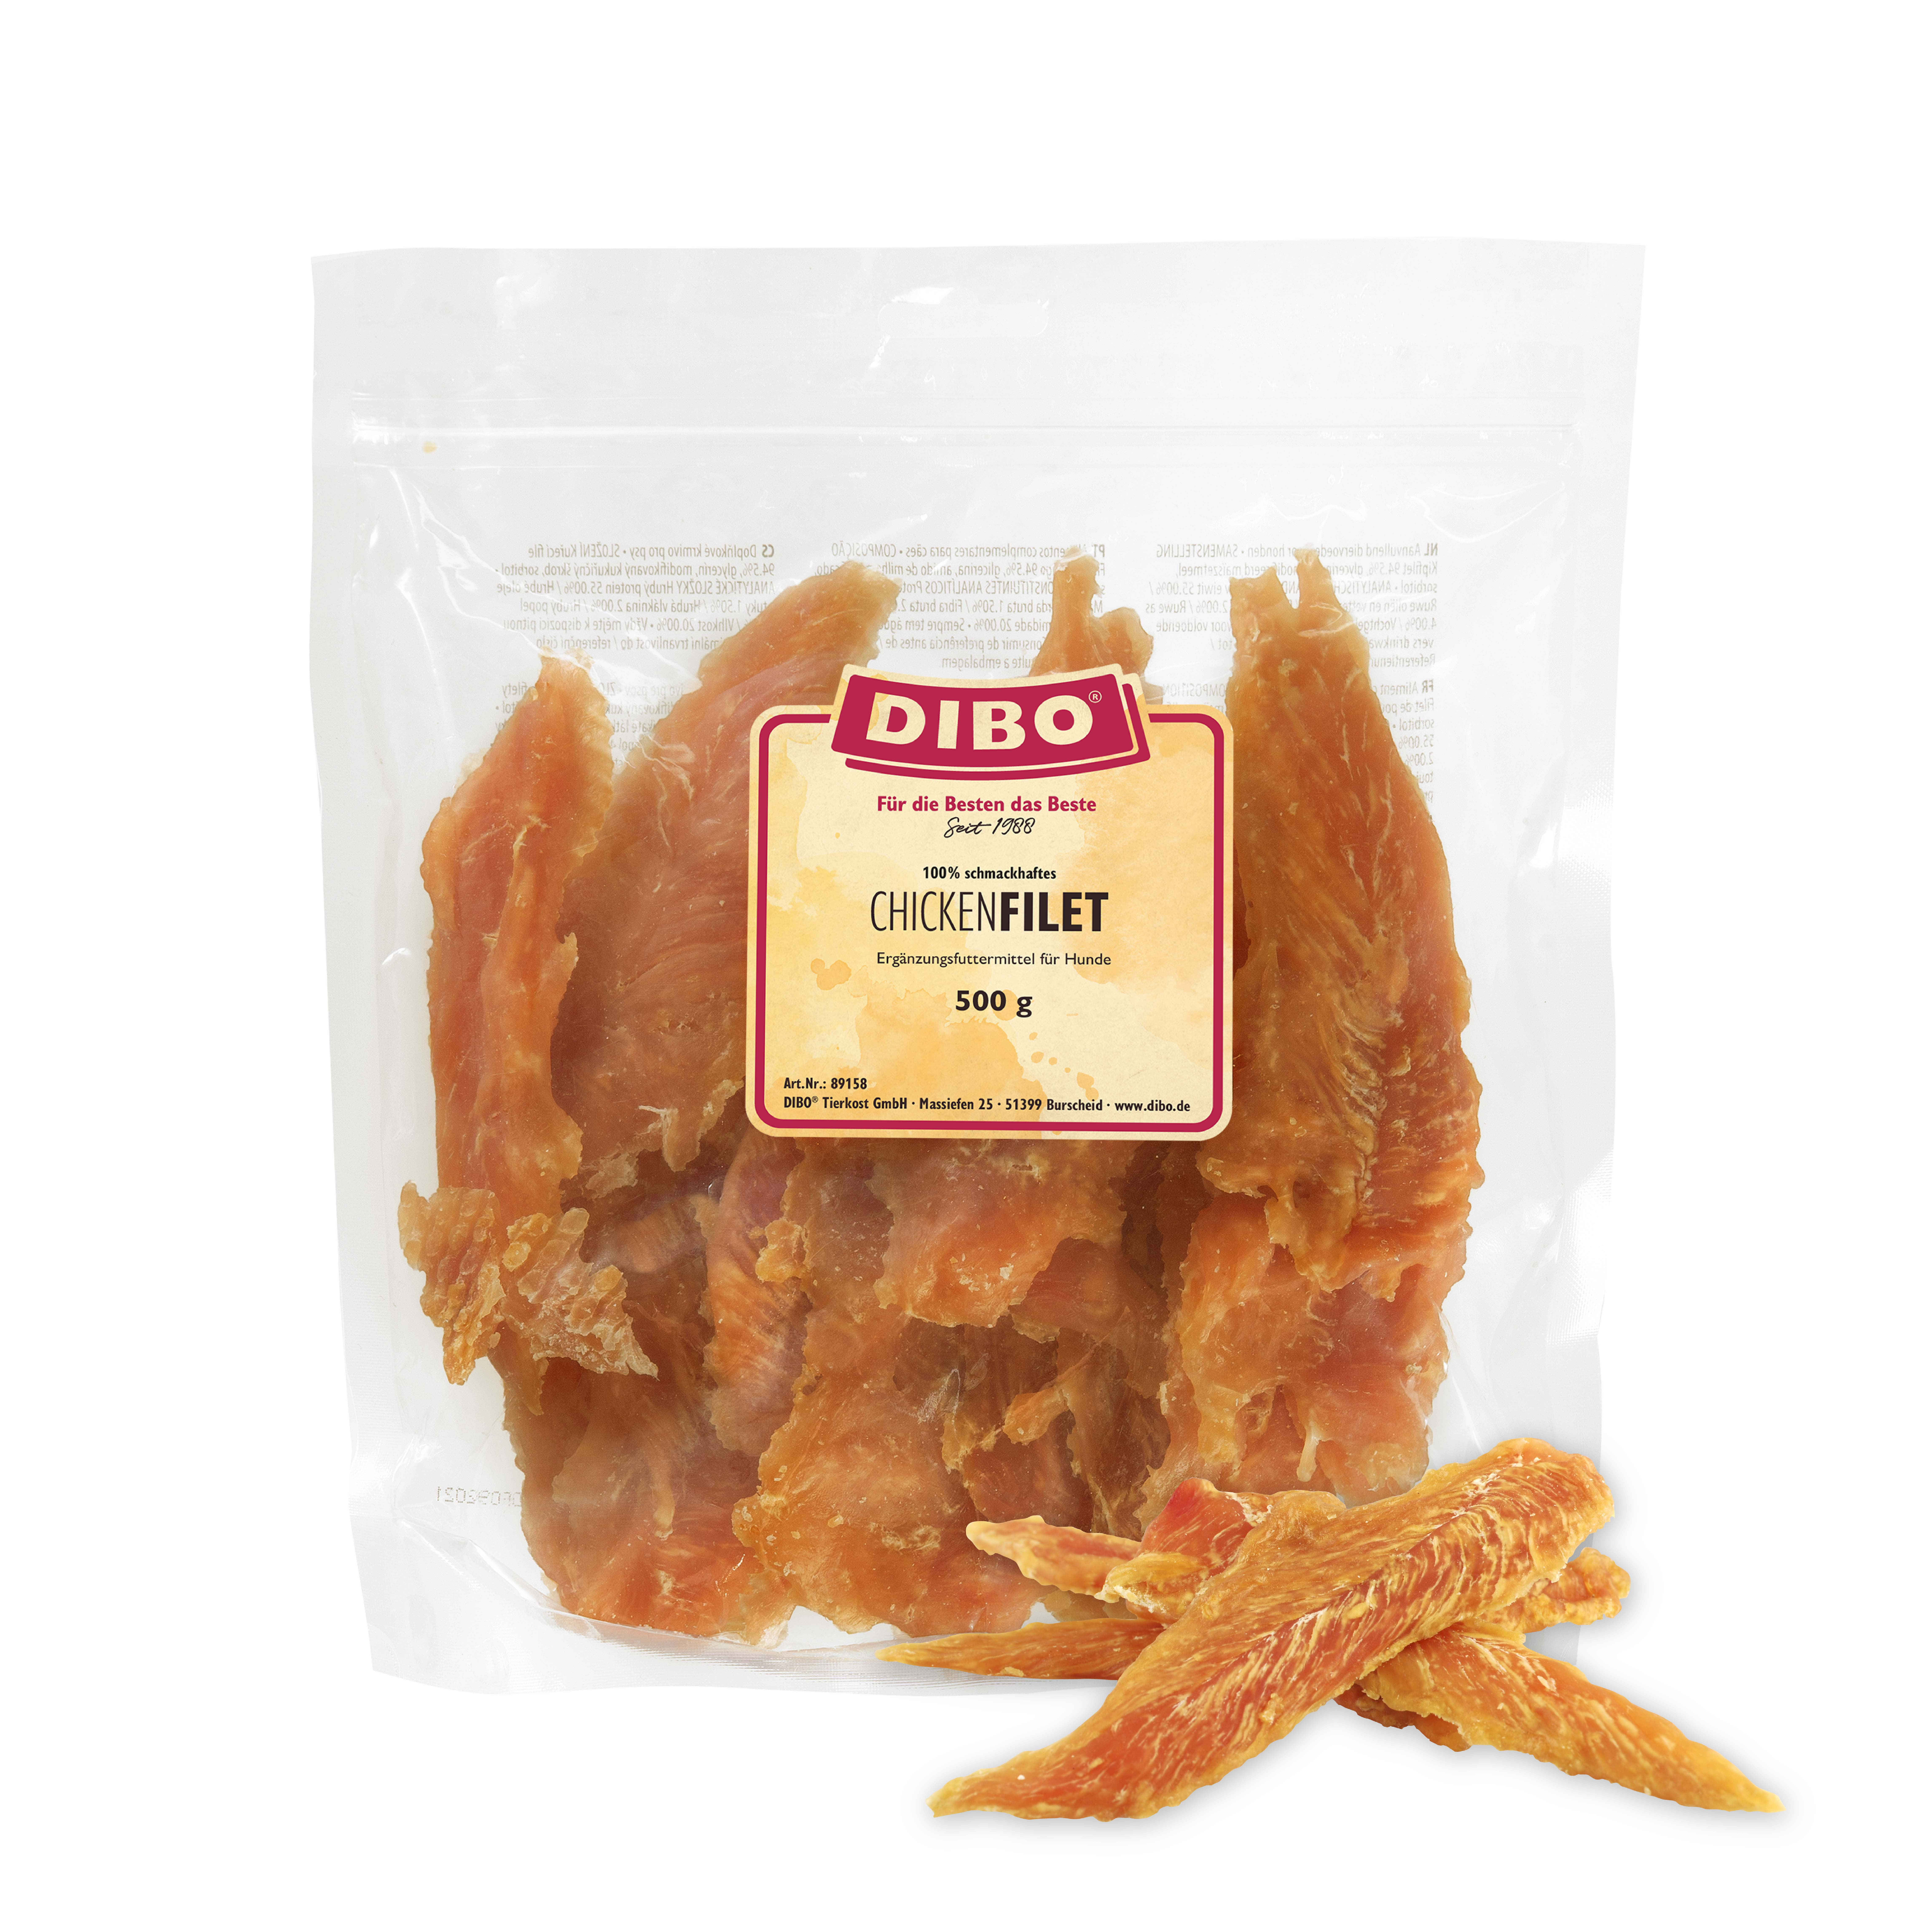 DIBO Chicken Filet, 500g-Beutel